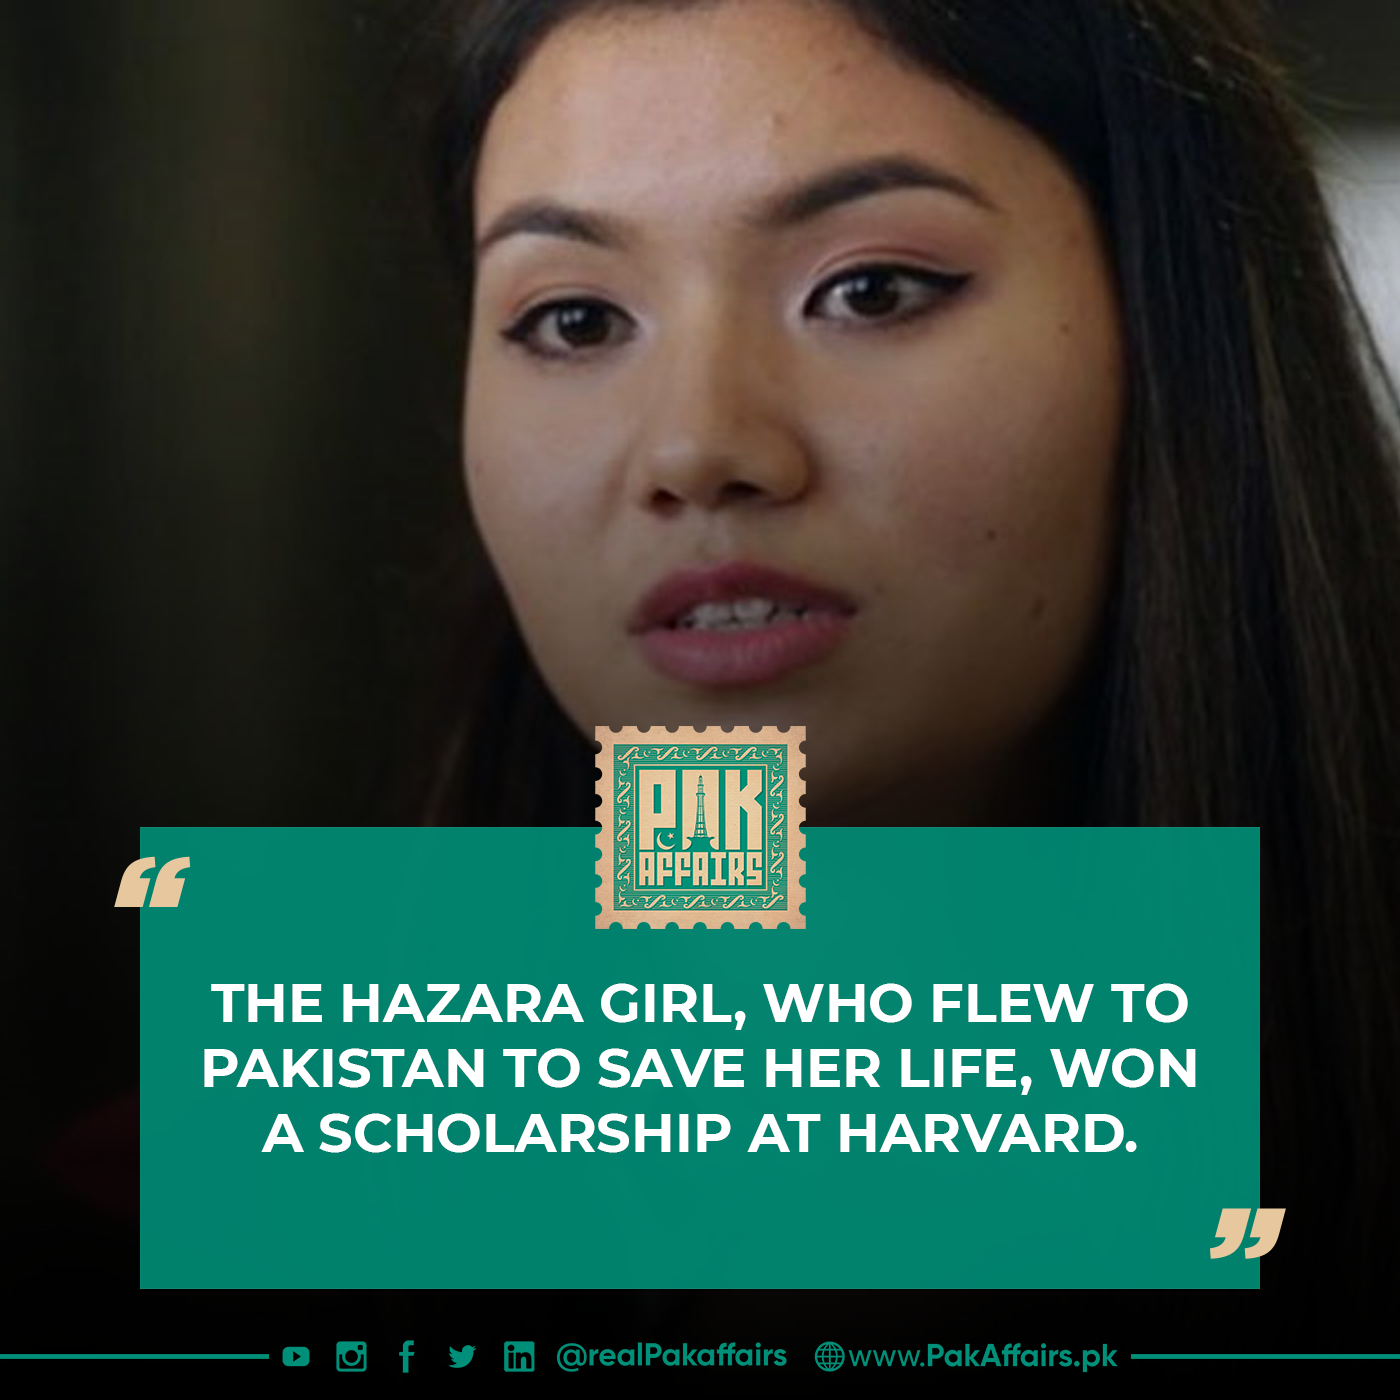 The Hazara girl, who flew to Pakistan to save her life, won a scholarship at Harvard